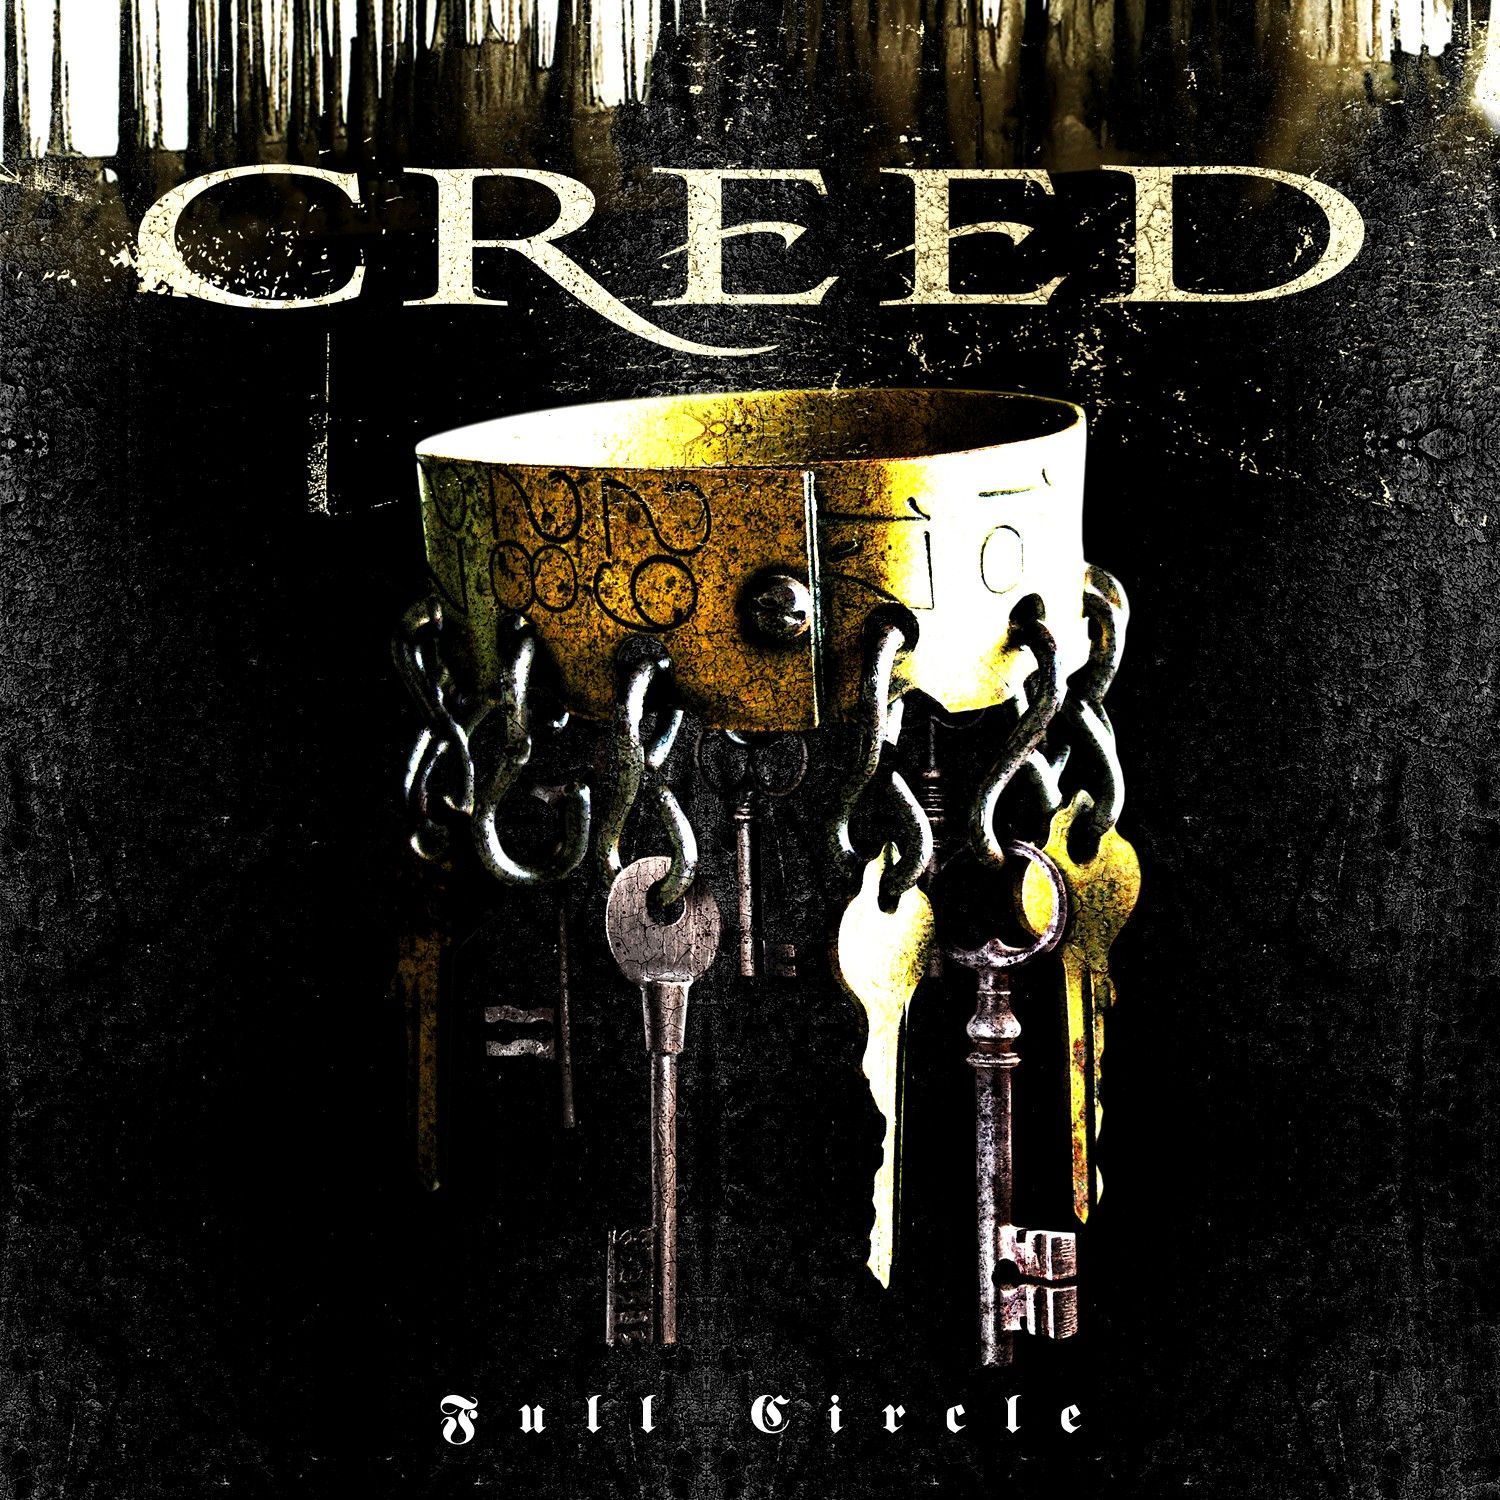 My Sacrifice - Creed - Cifra Club